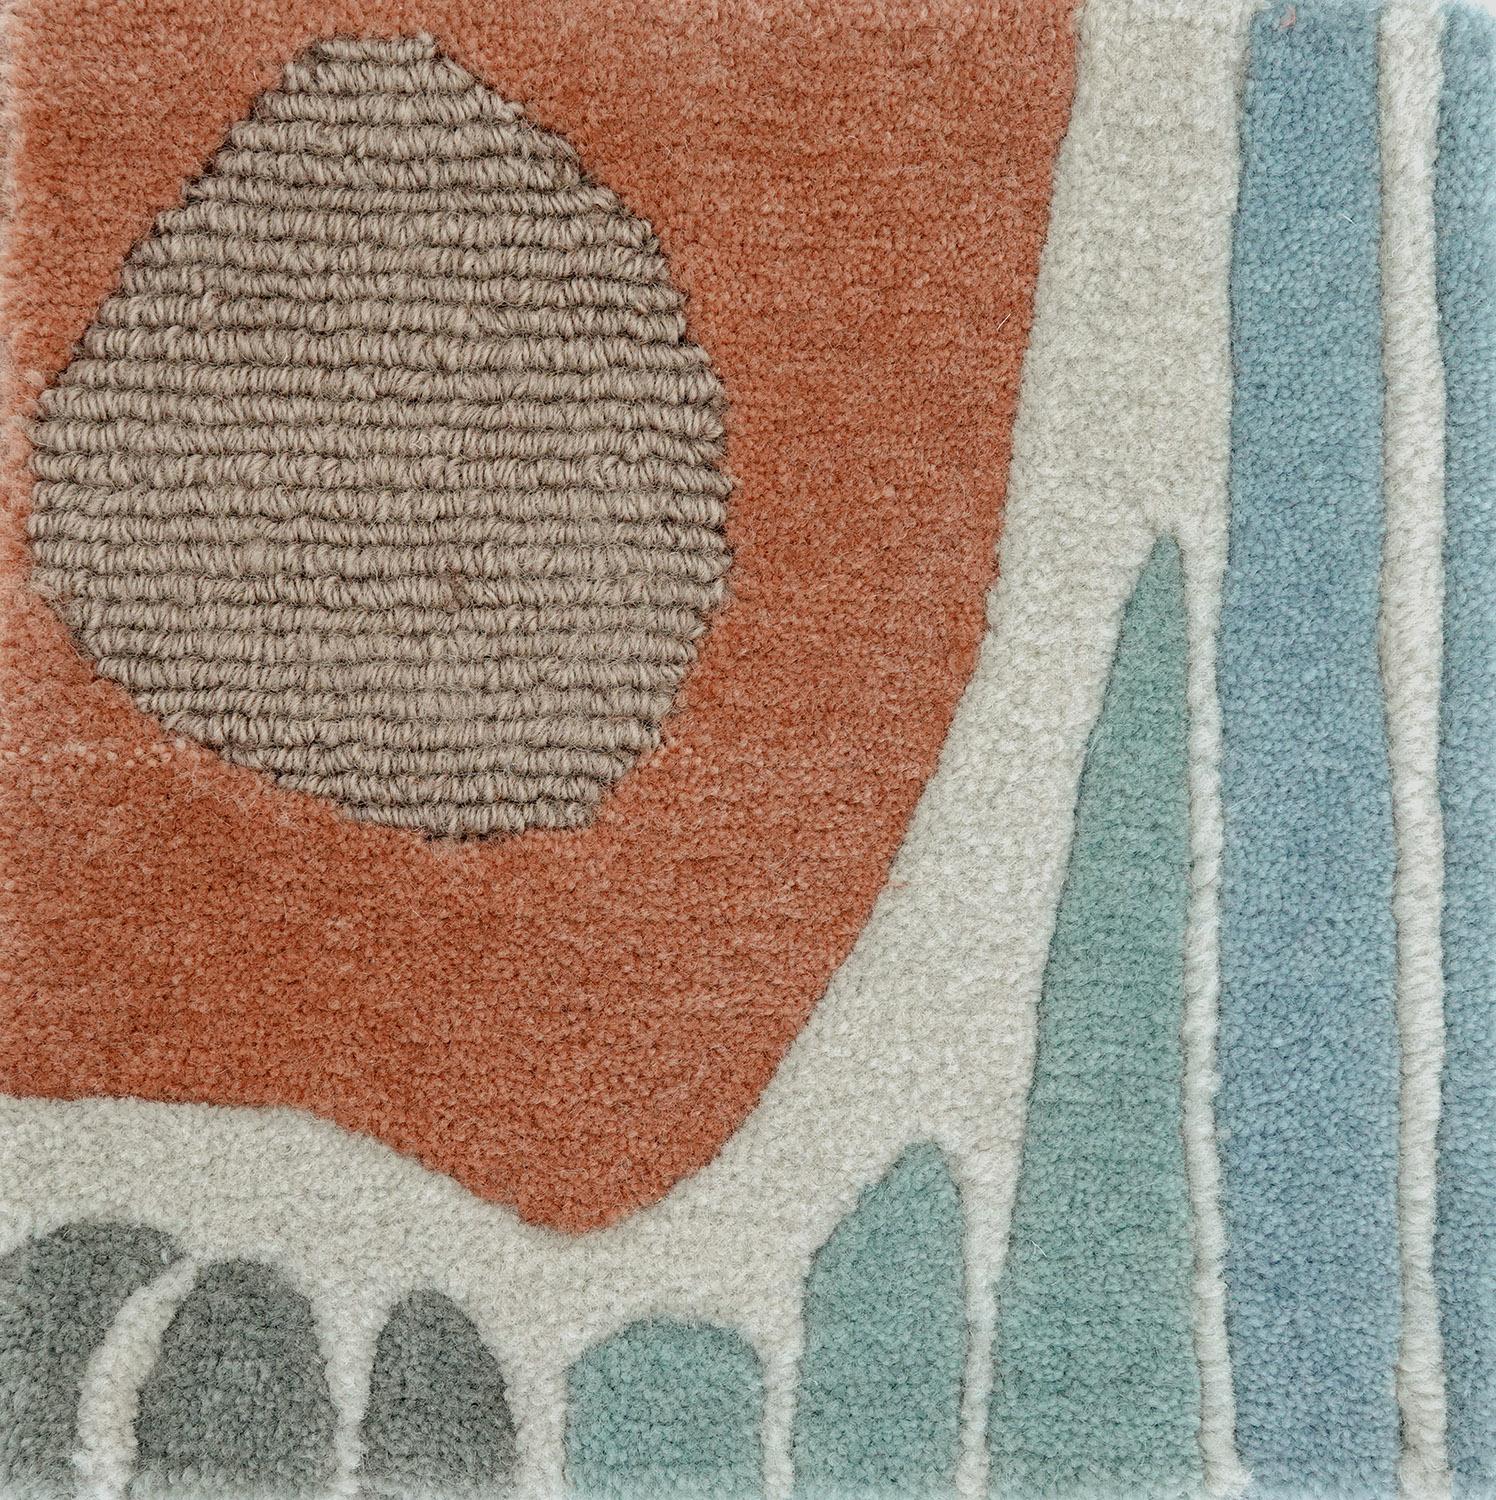 Modern colofrul unusual rug Multicolored Irregular shape, Gamma Est small For Sale 4